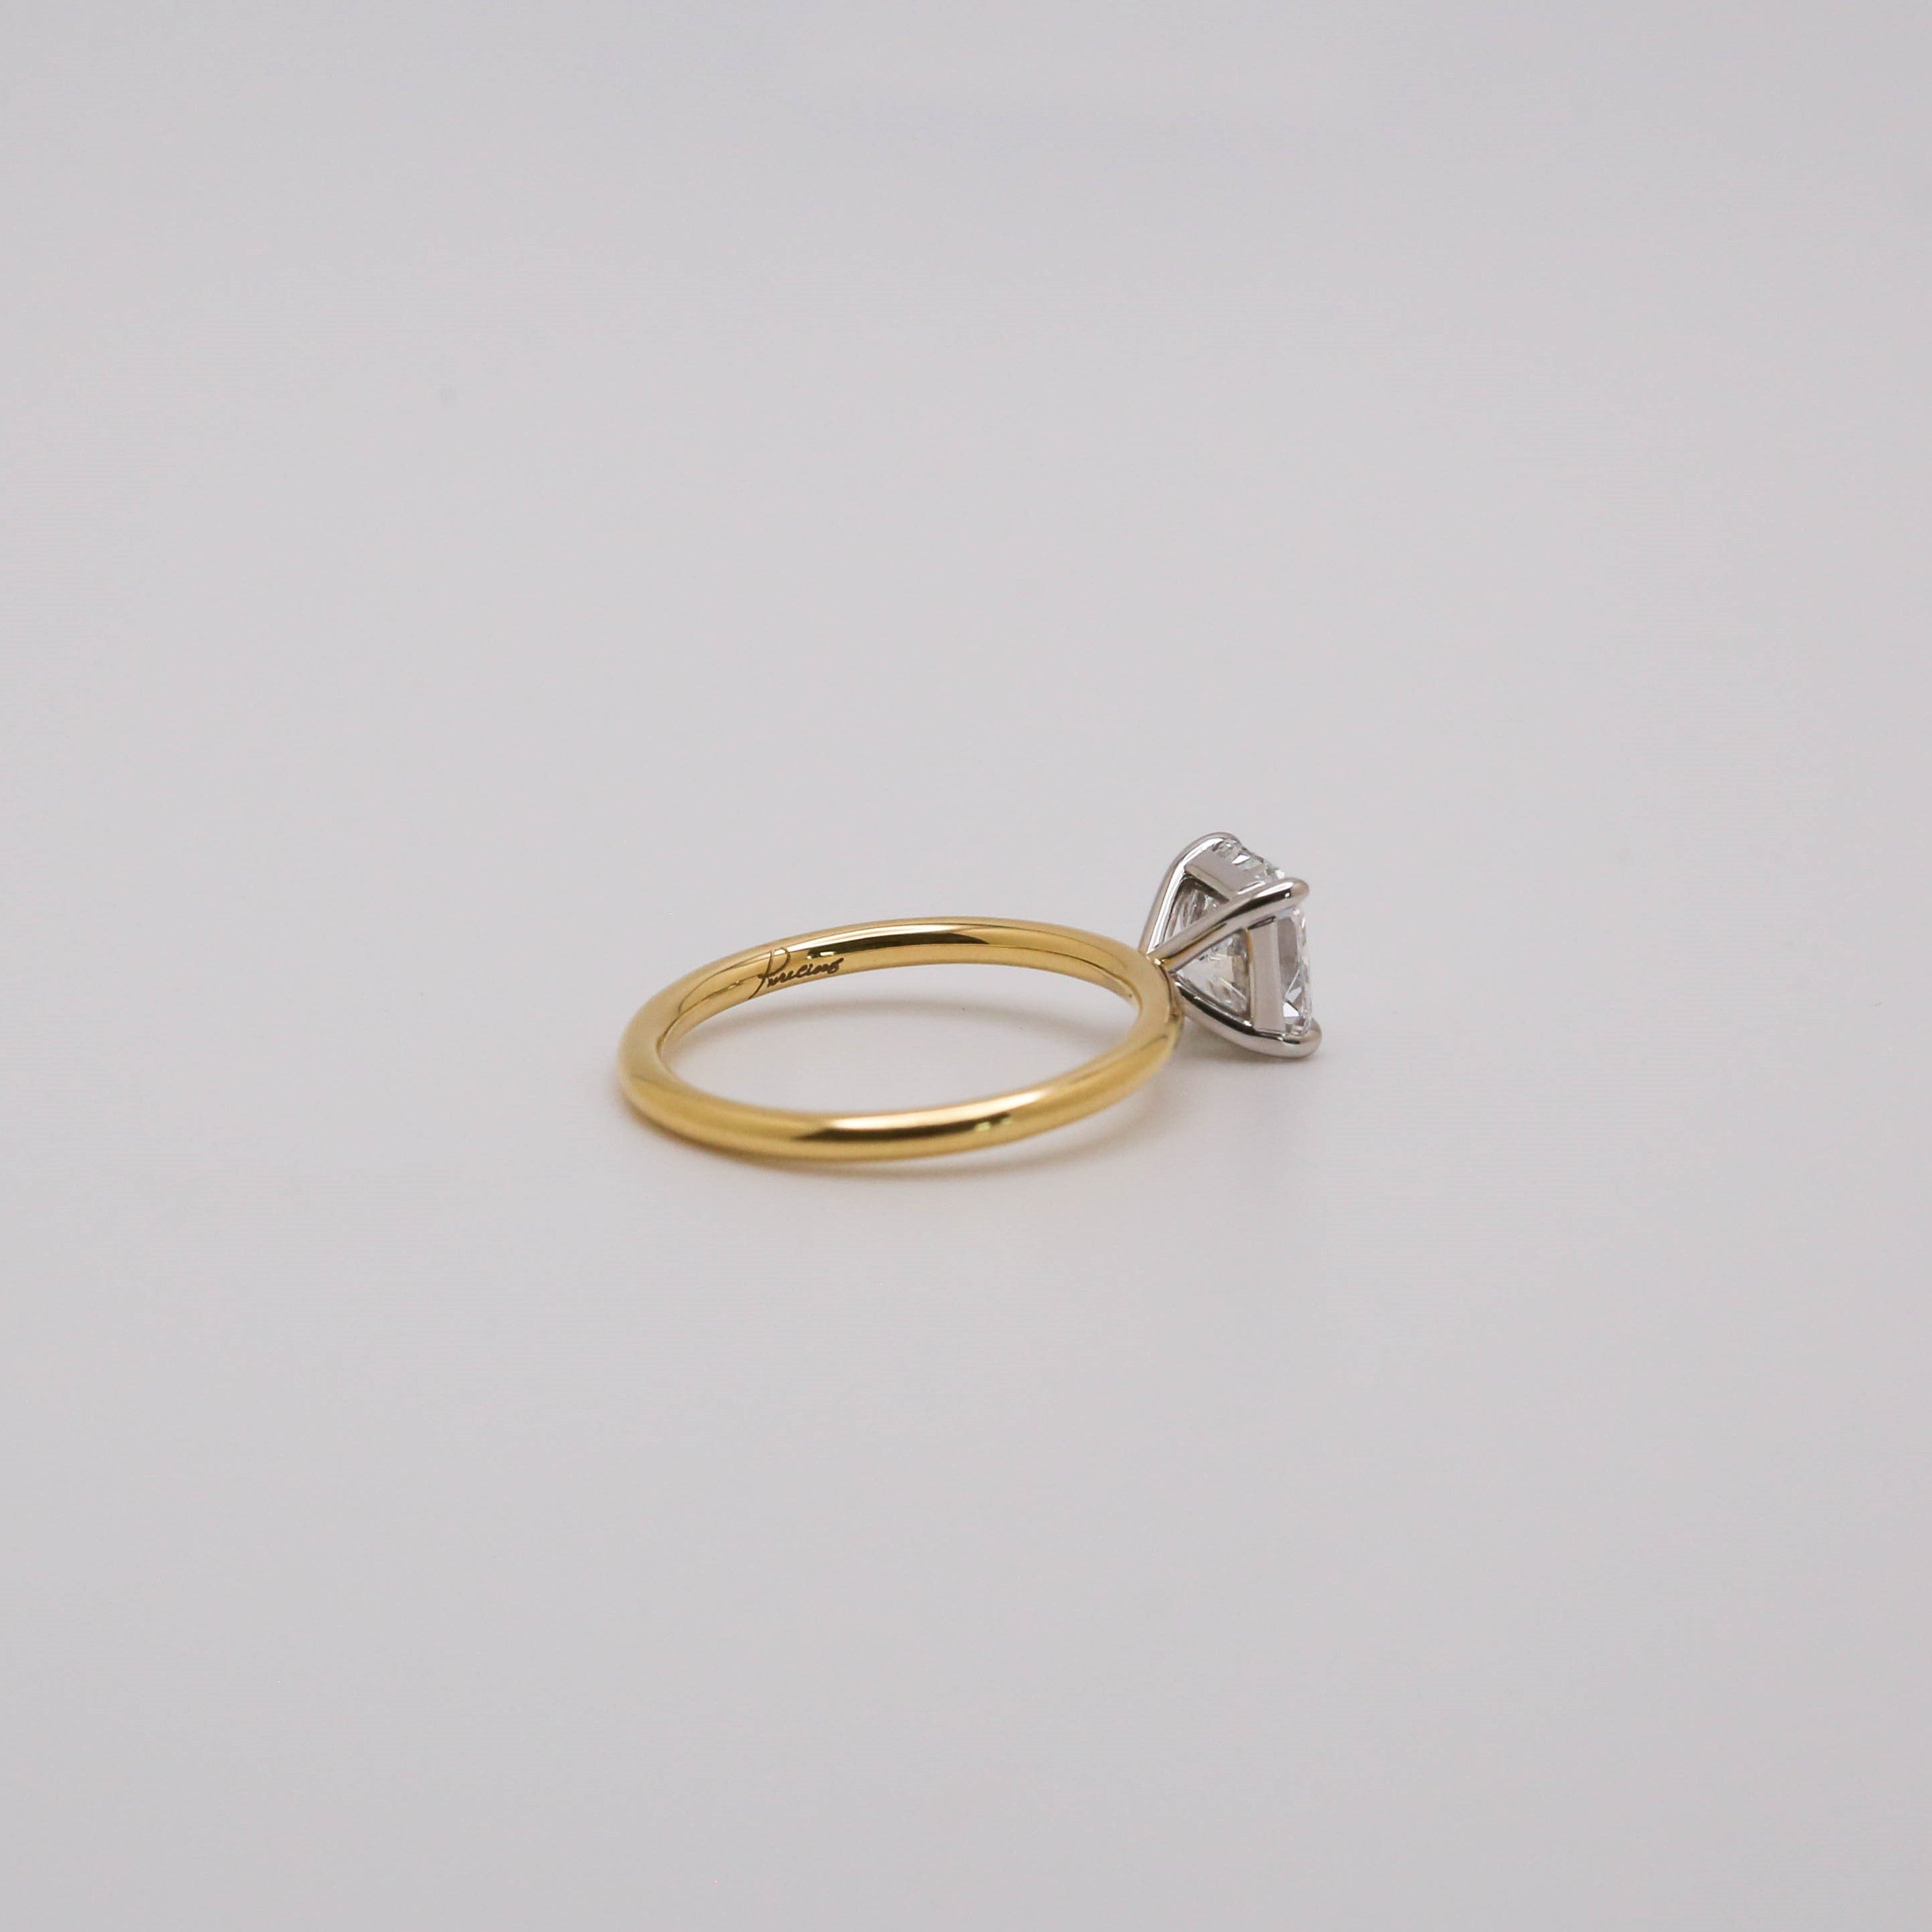 2 tone radiant cut lab diamond engagement ring